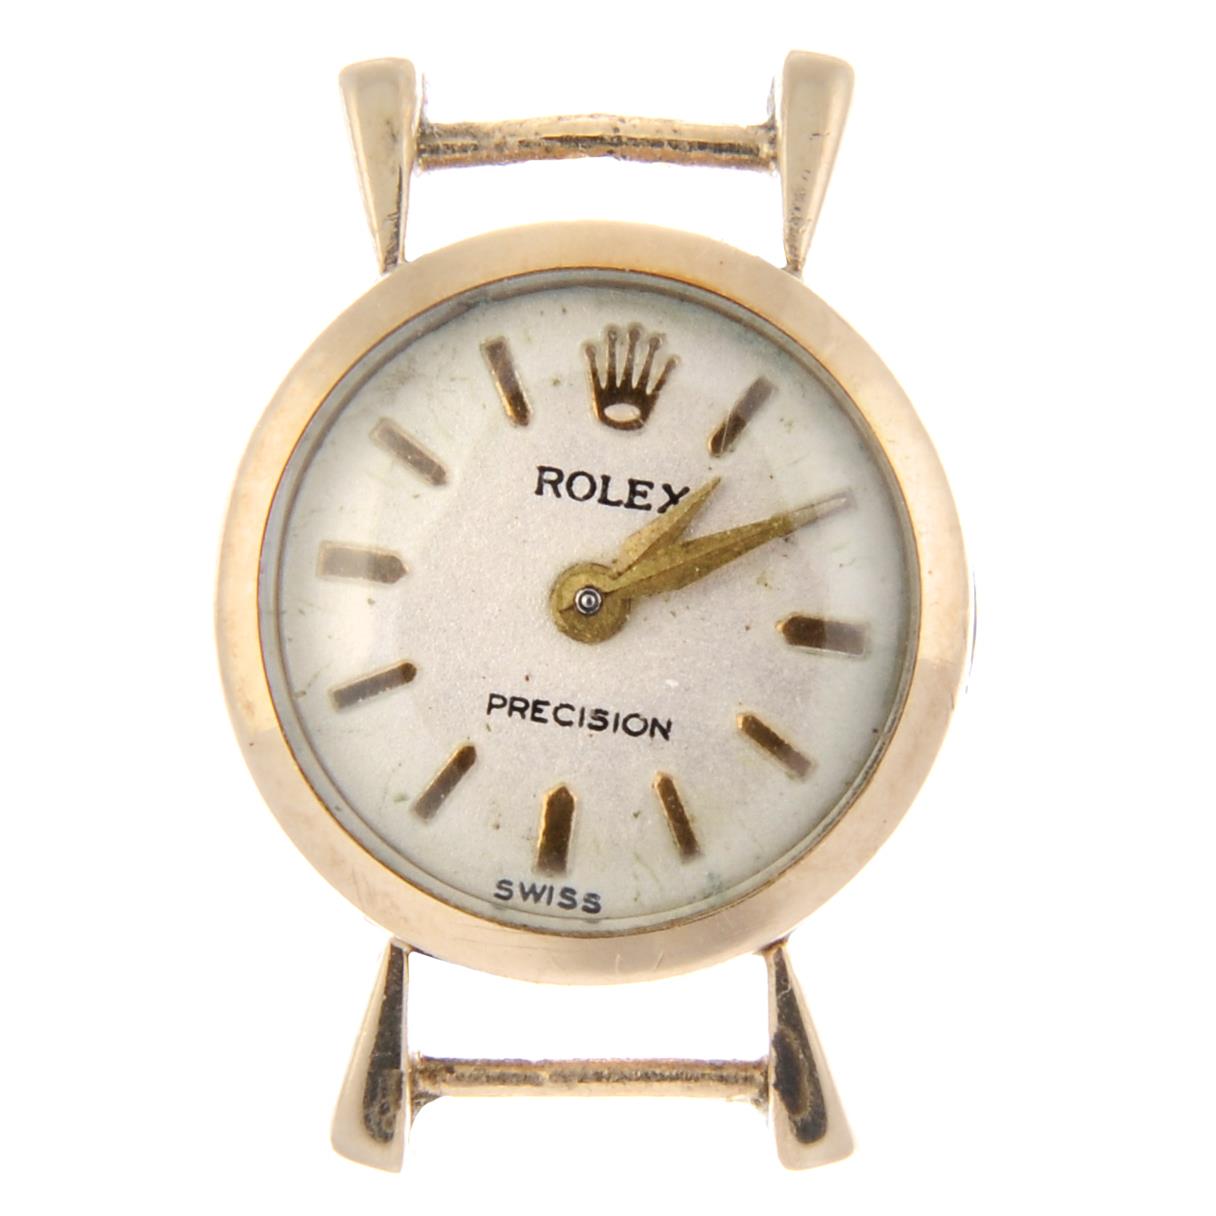 ROLEX - a lady's watch head.